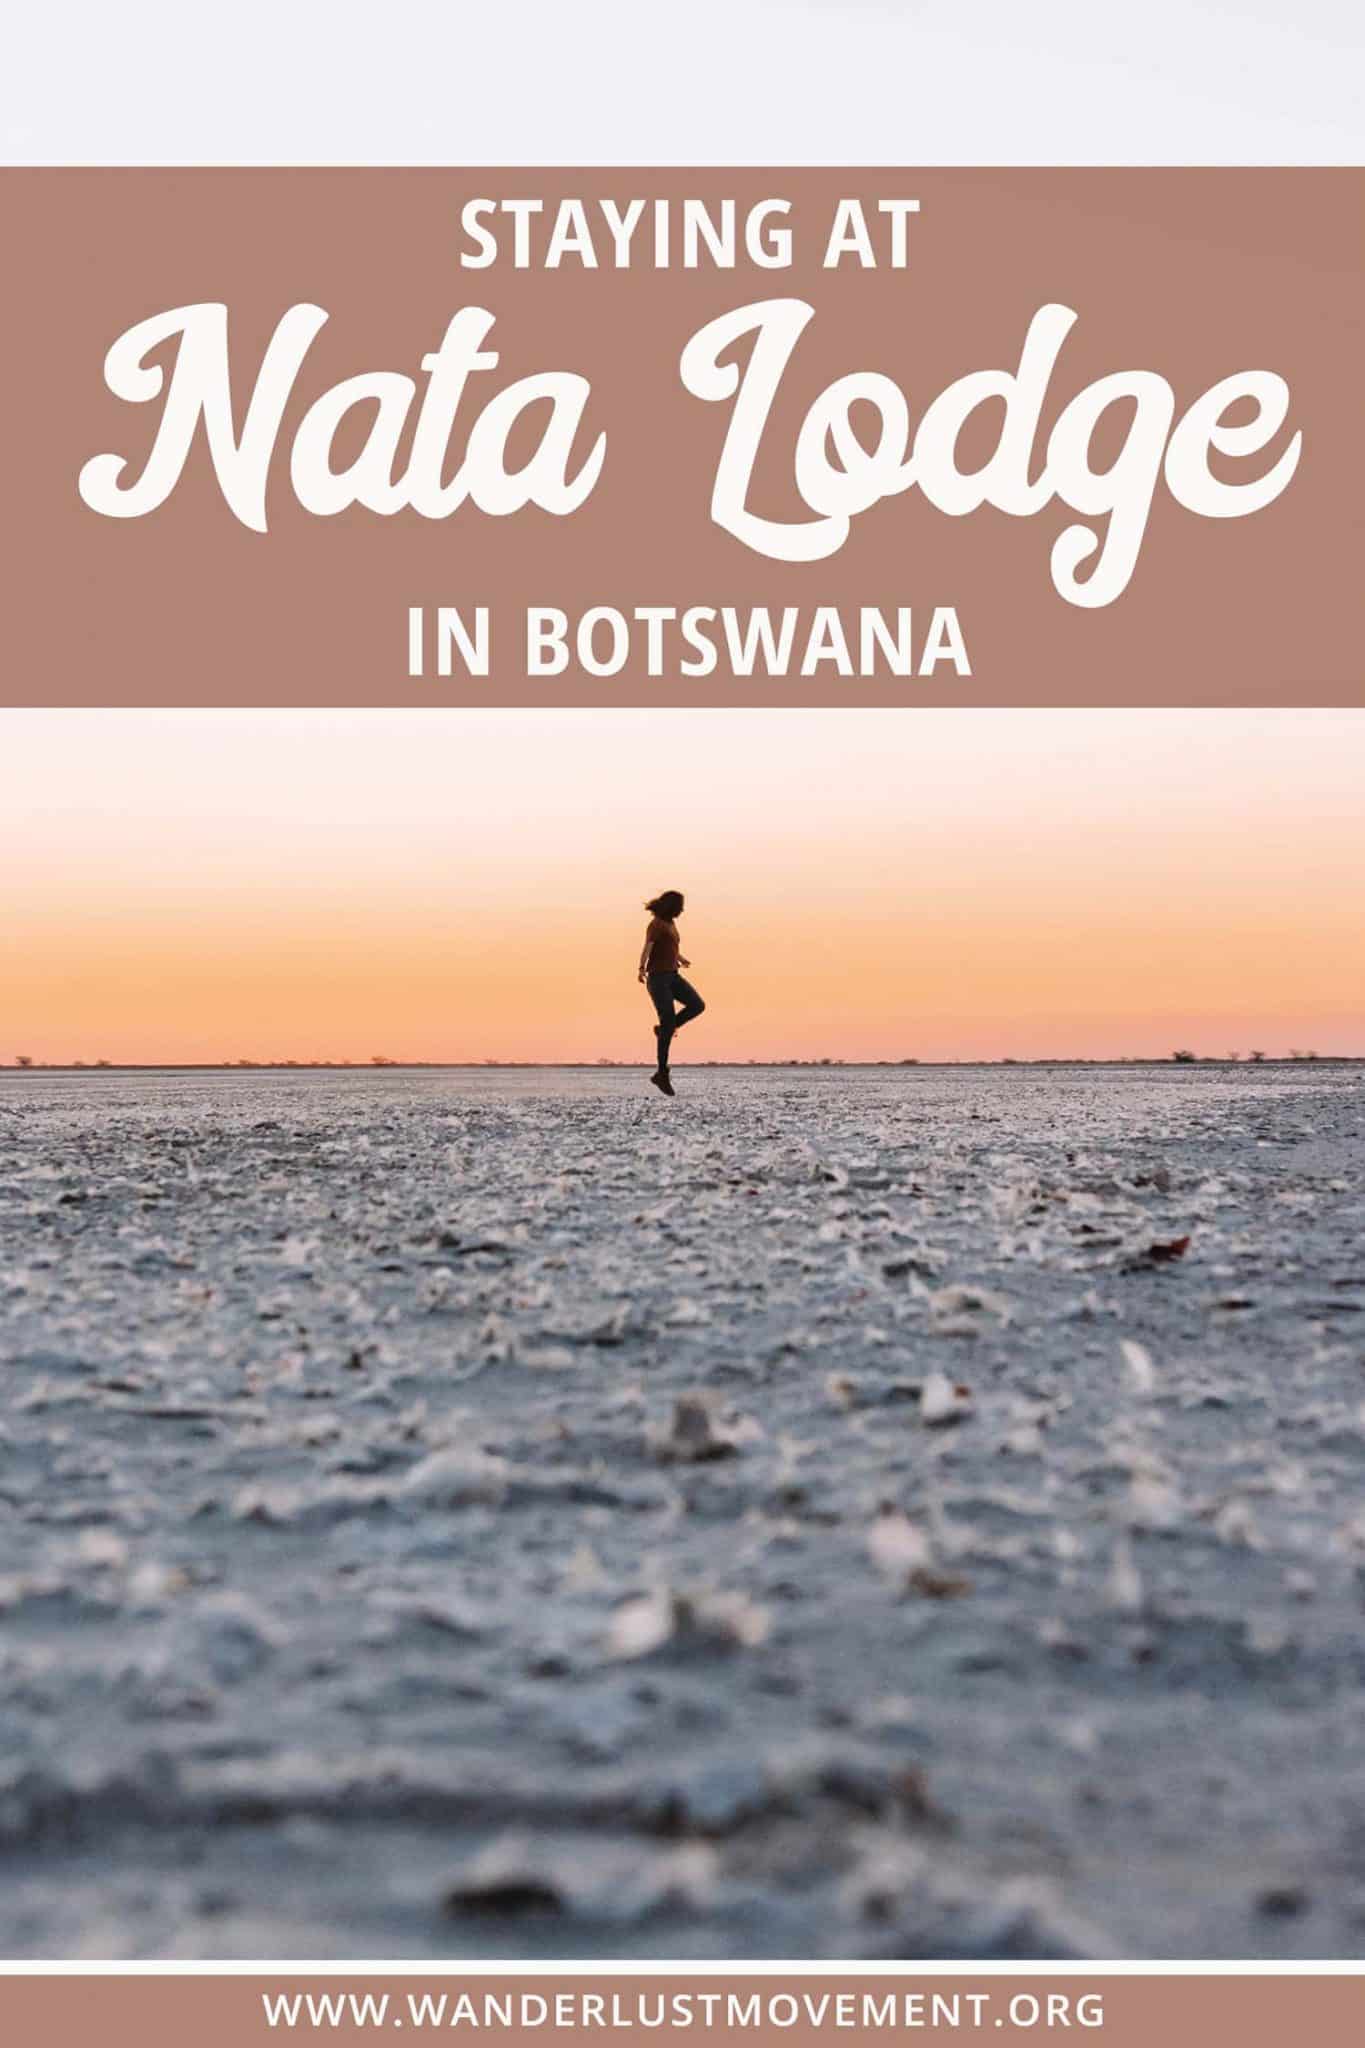 Staying at Nata Lodge in Botswana